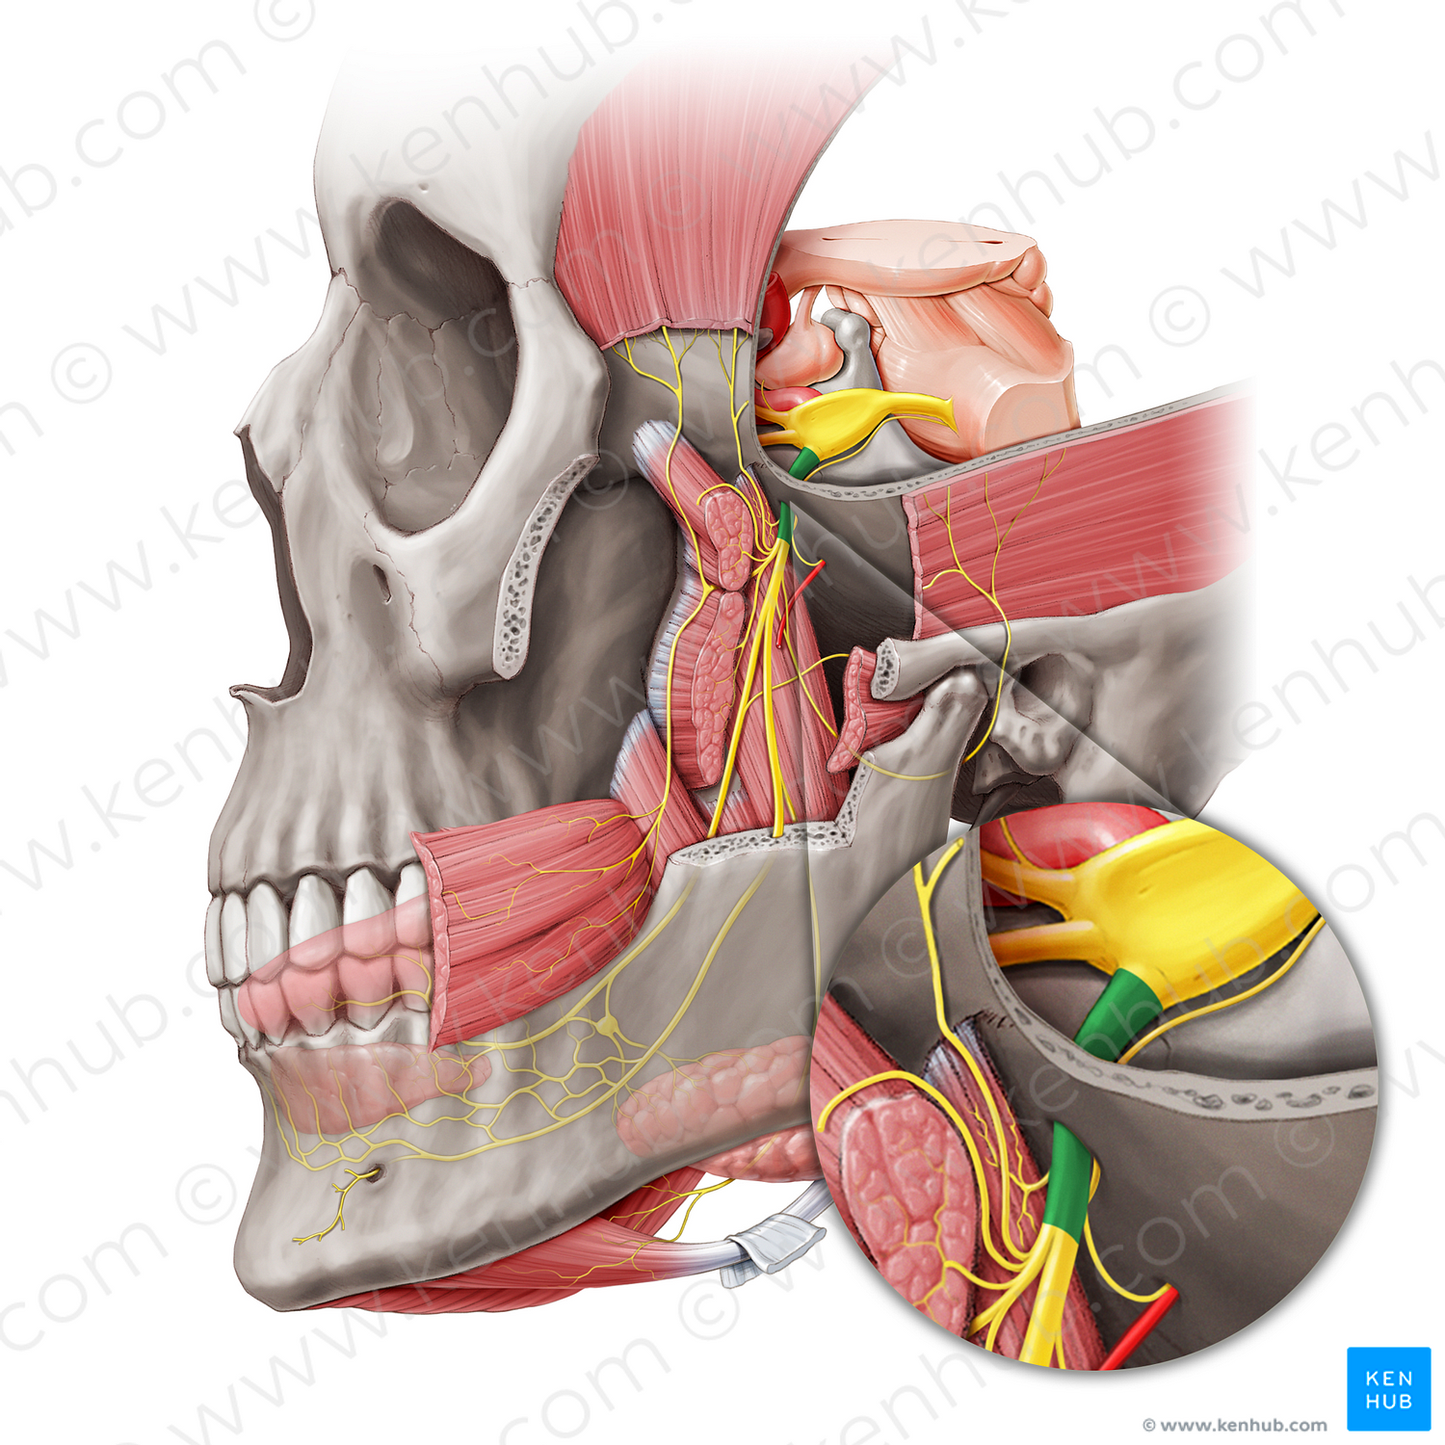 Mandibular nerve (#6548)